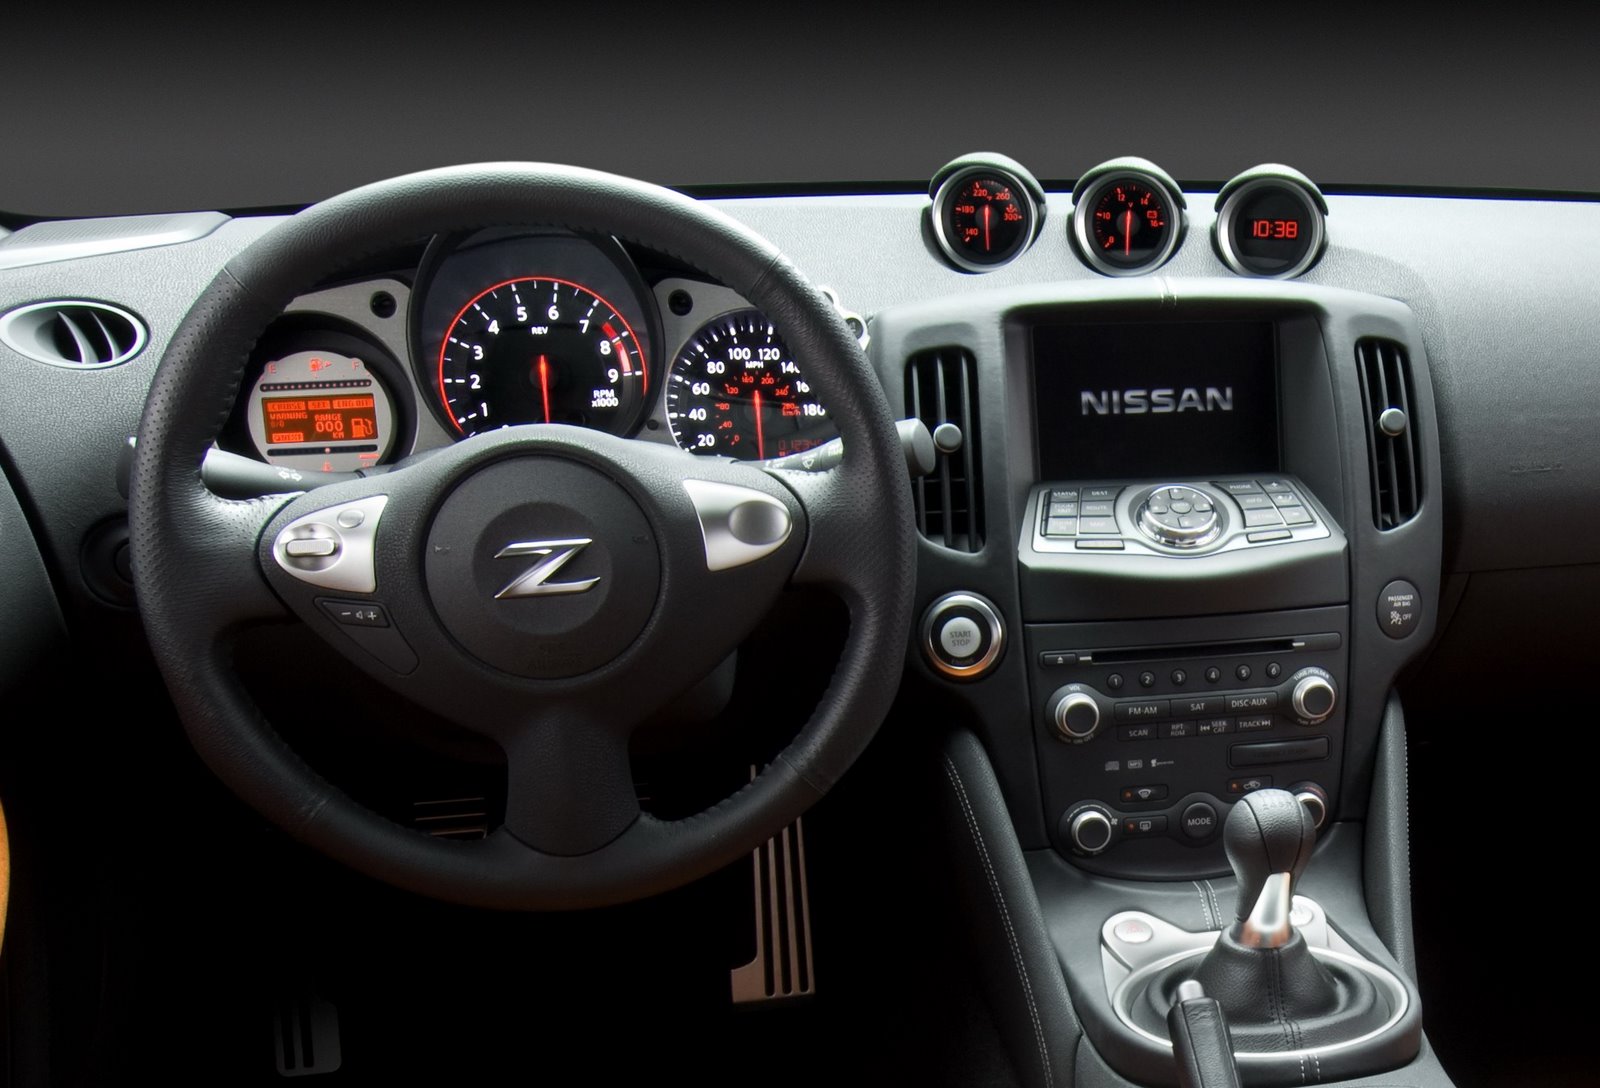 2010 Nissan murano compact flash player #8